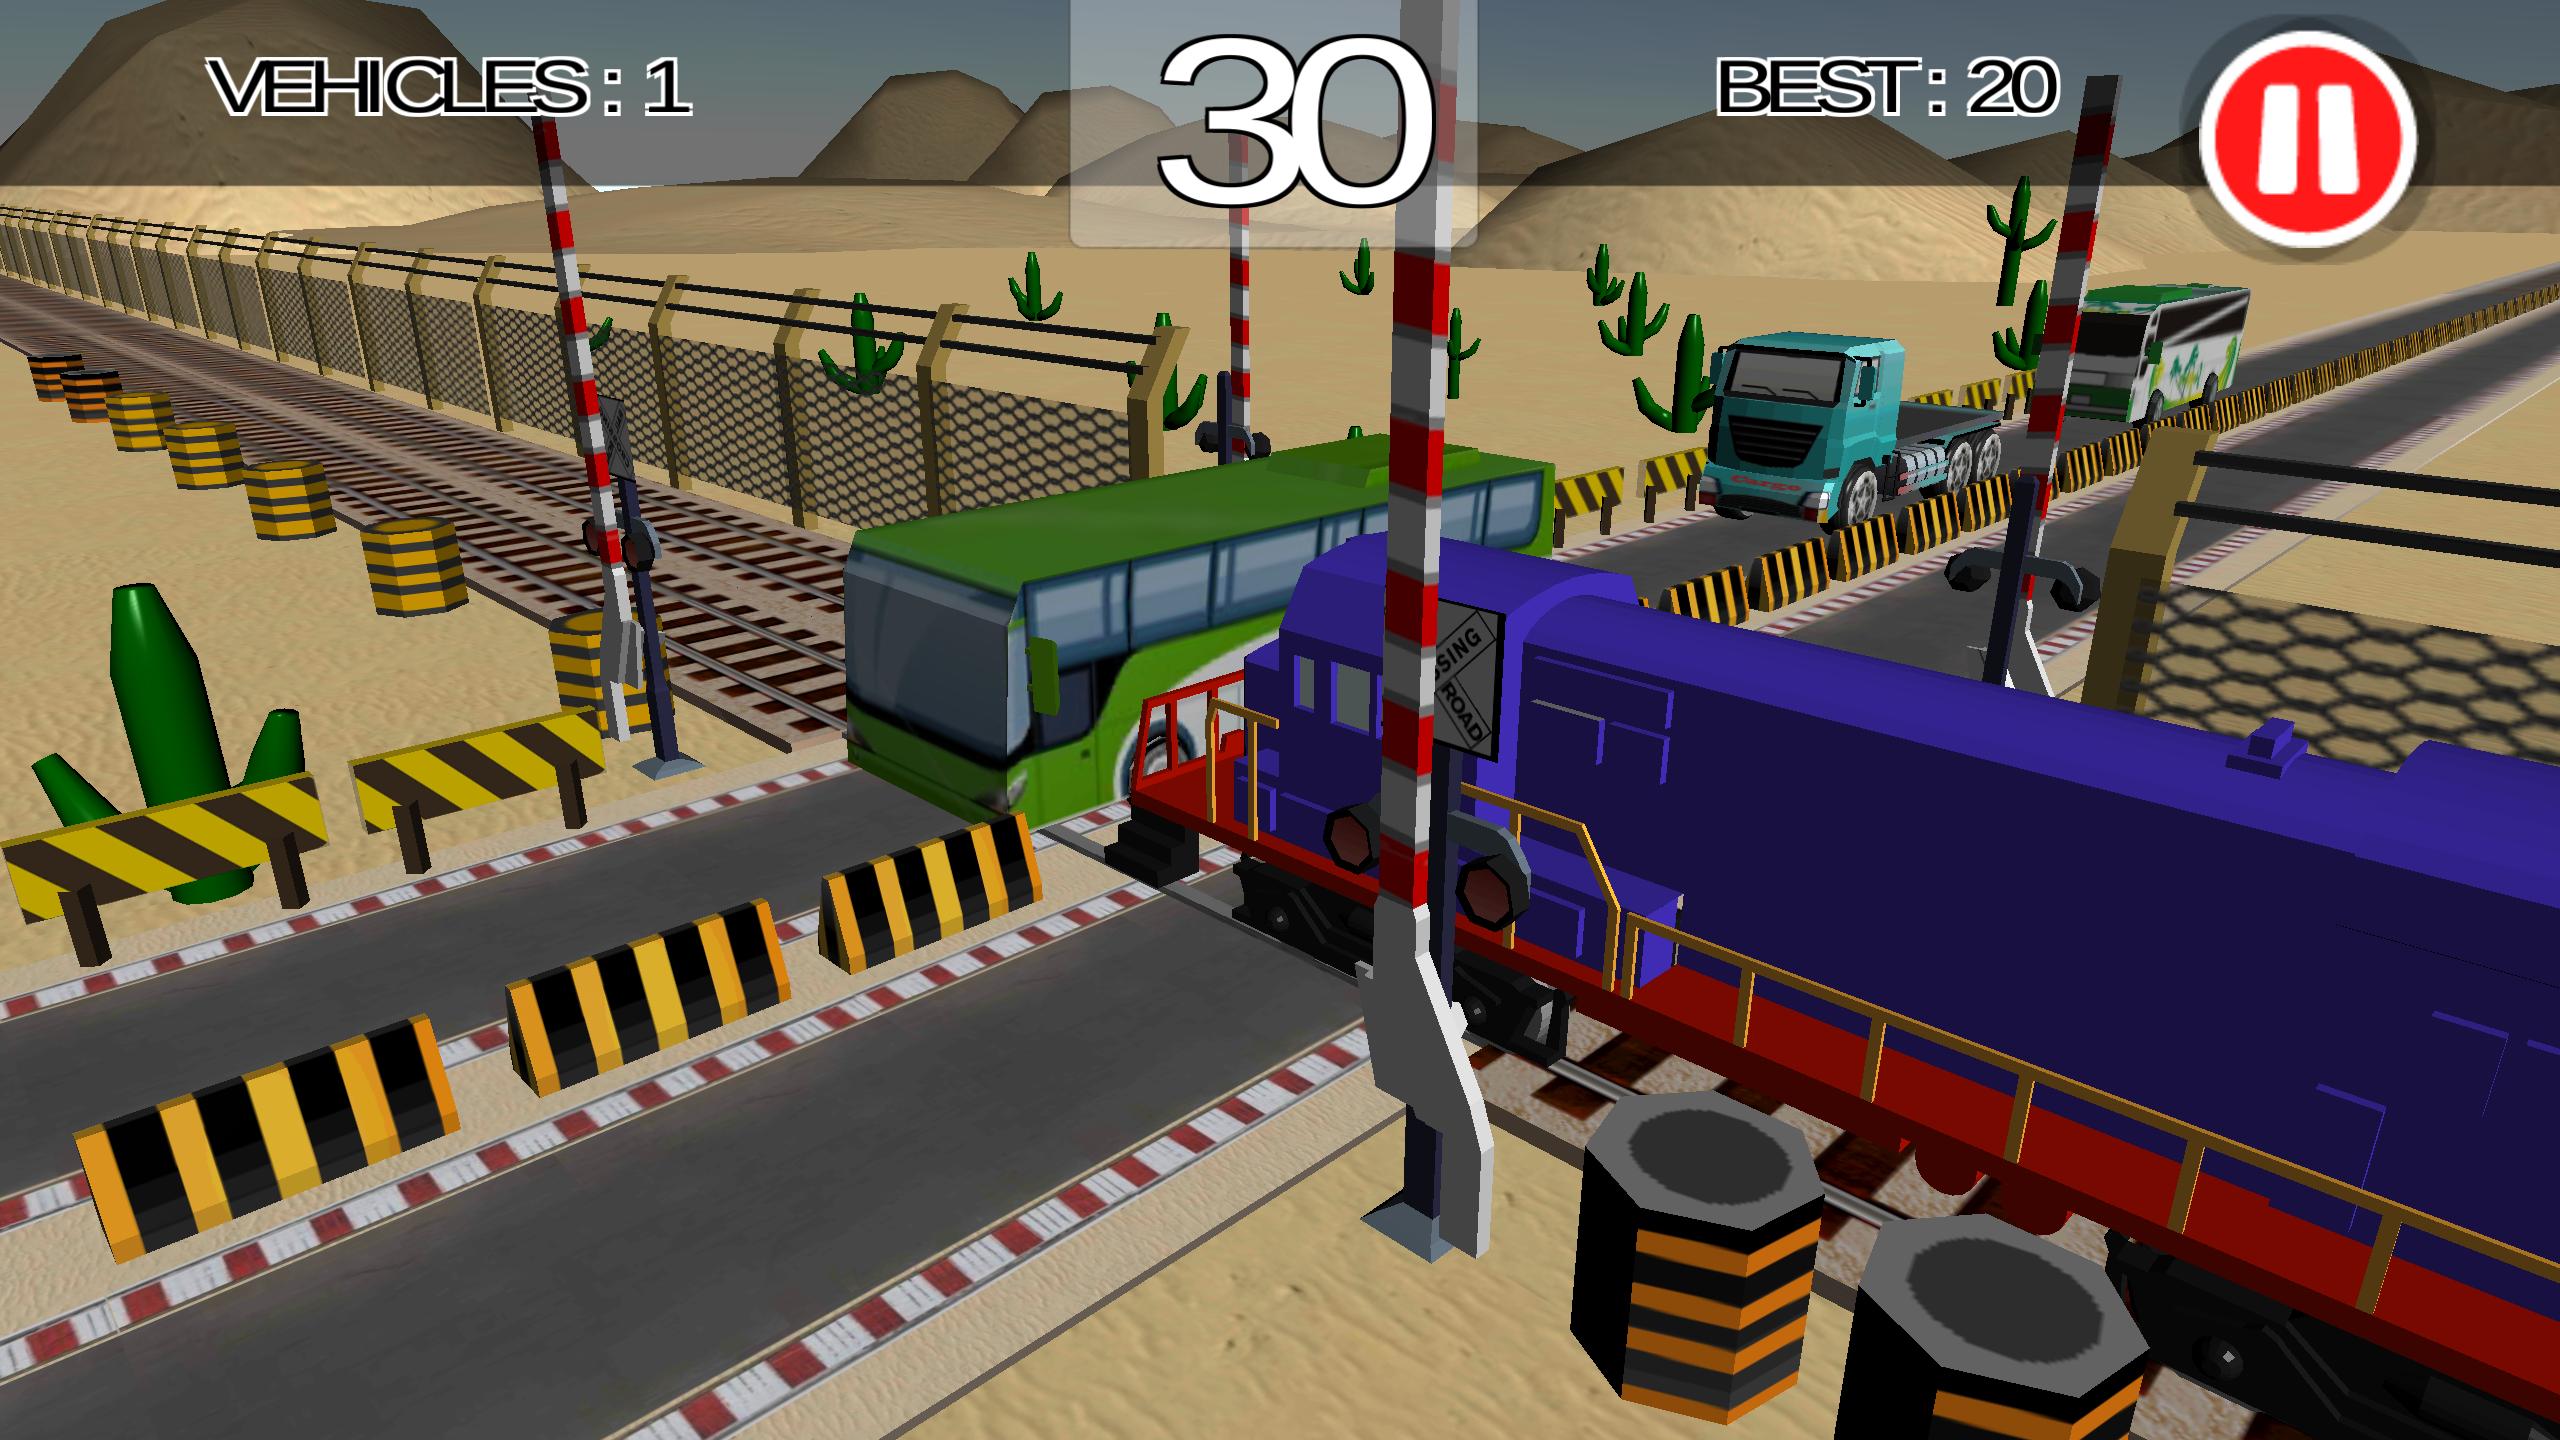 Railroad Crossing 3d Train Simulator Game For Android Apk Download - railroad crossing roblox game